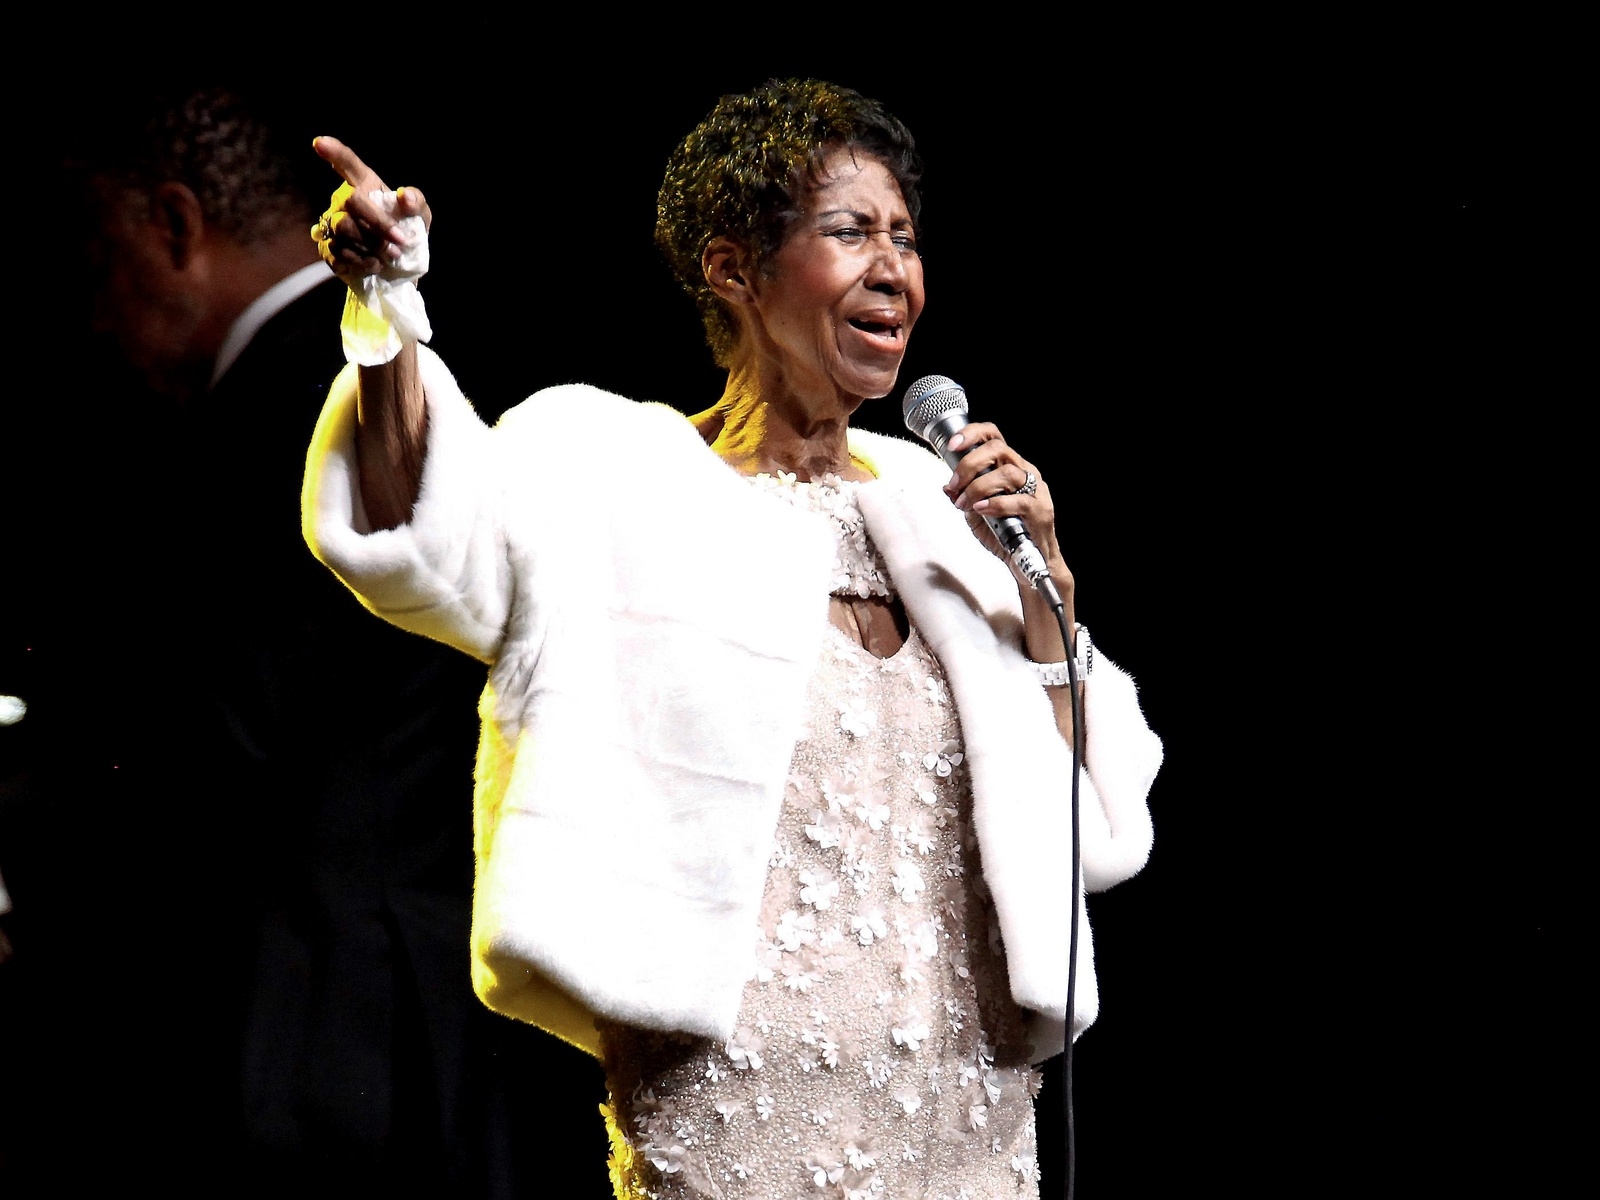 Souldrottningen Aretha Franklin blev 87 år gammal.
Foto: Andy Kropa/Invision/AP